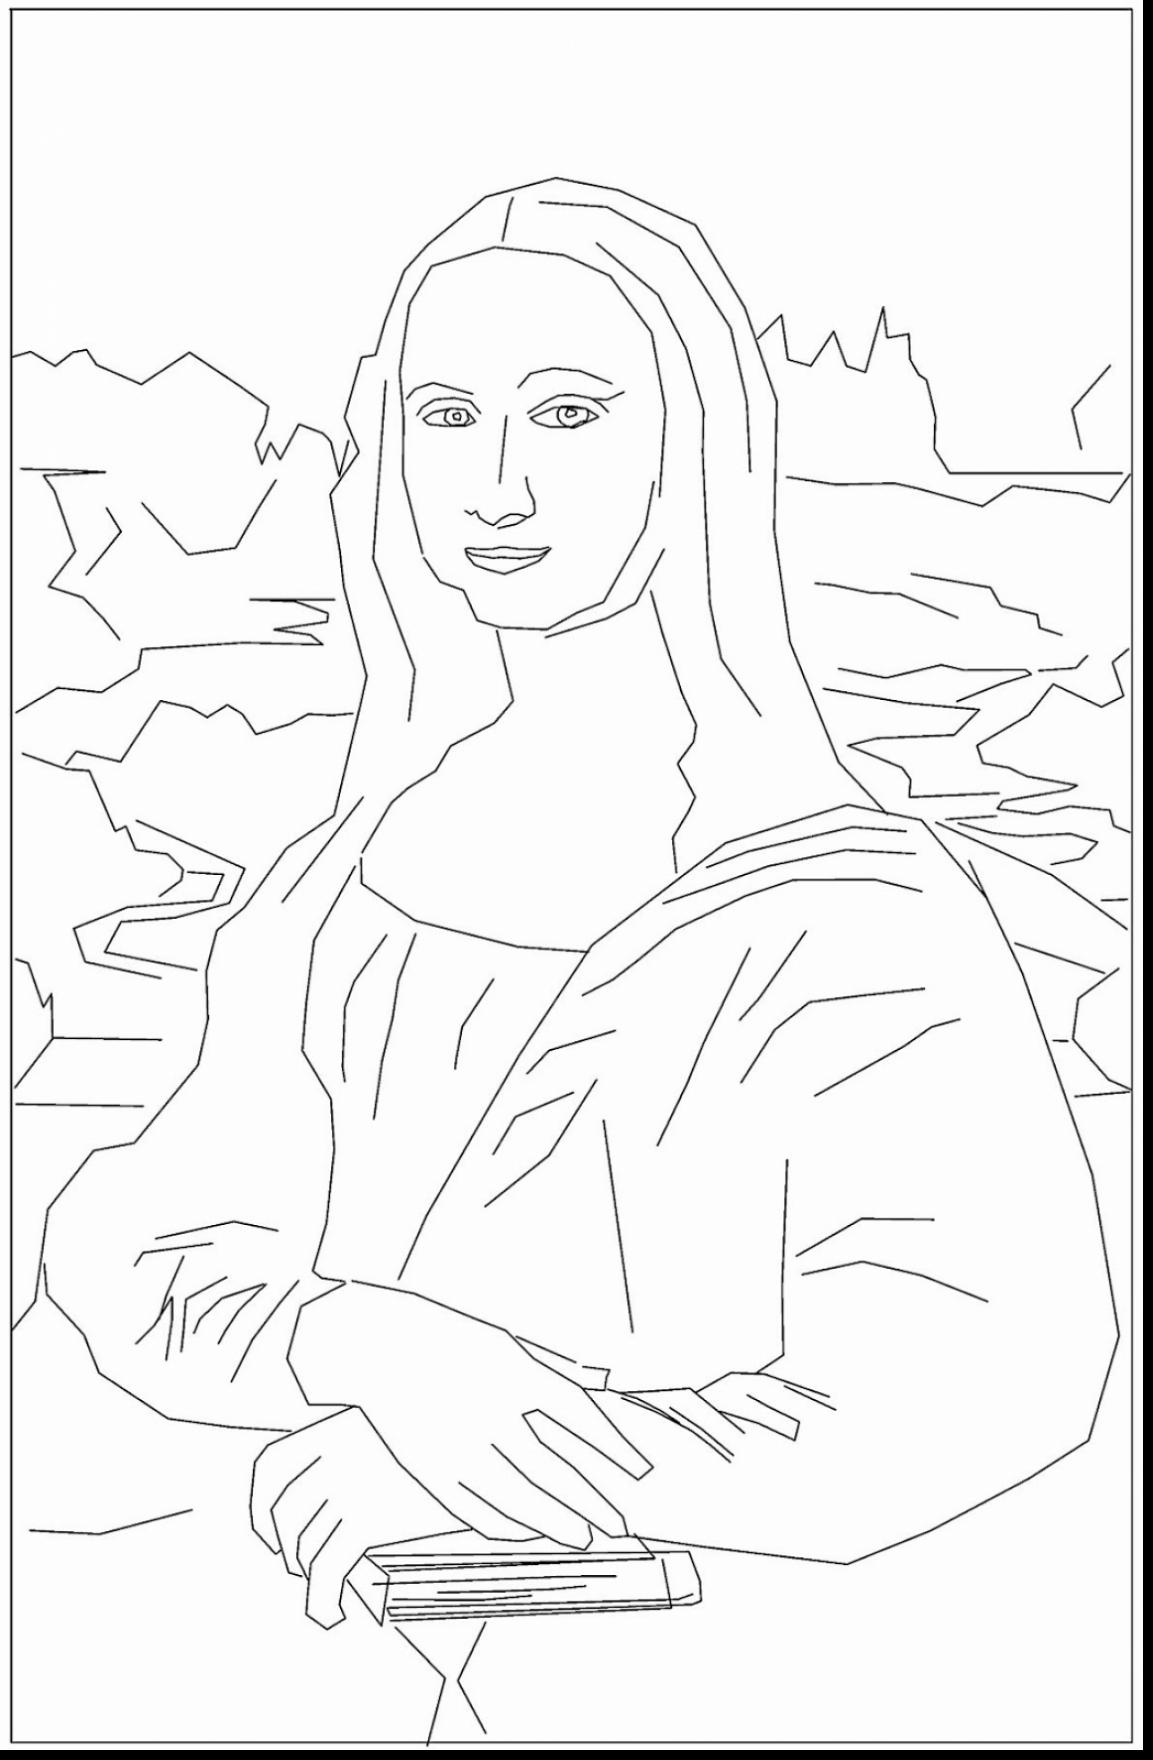 Mona Lisa Coloring Page at GetColorings.com | Free printable colorings